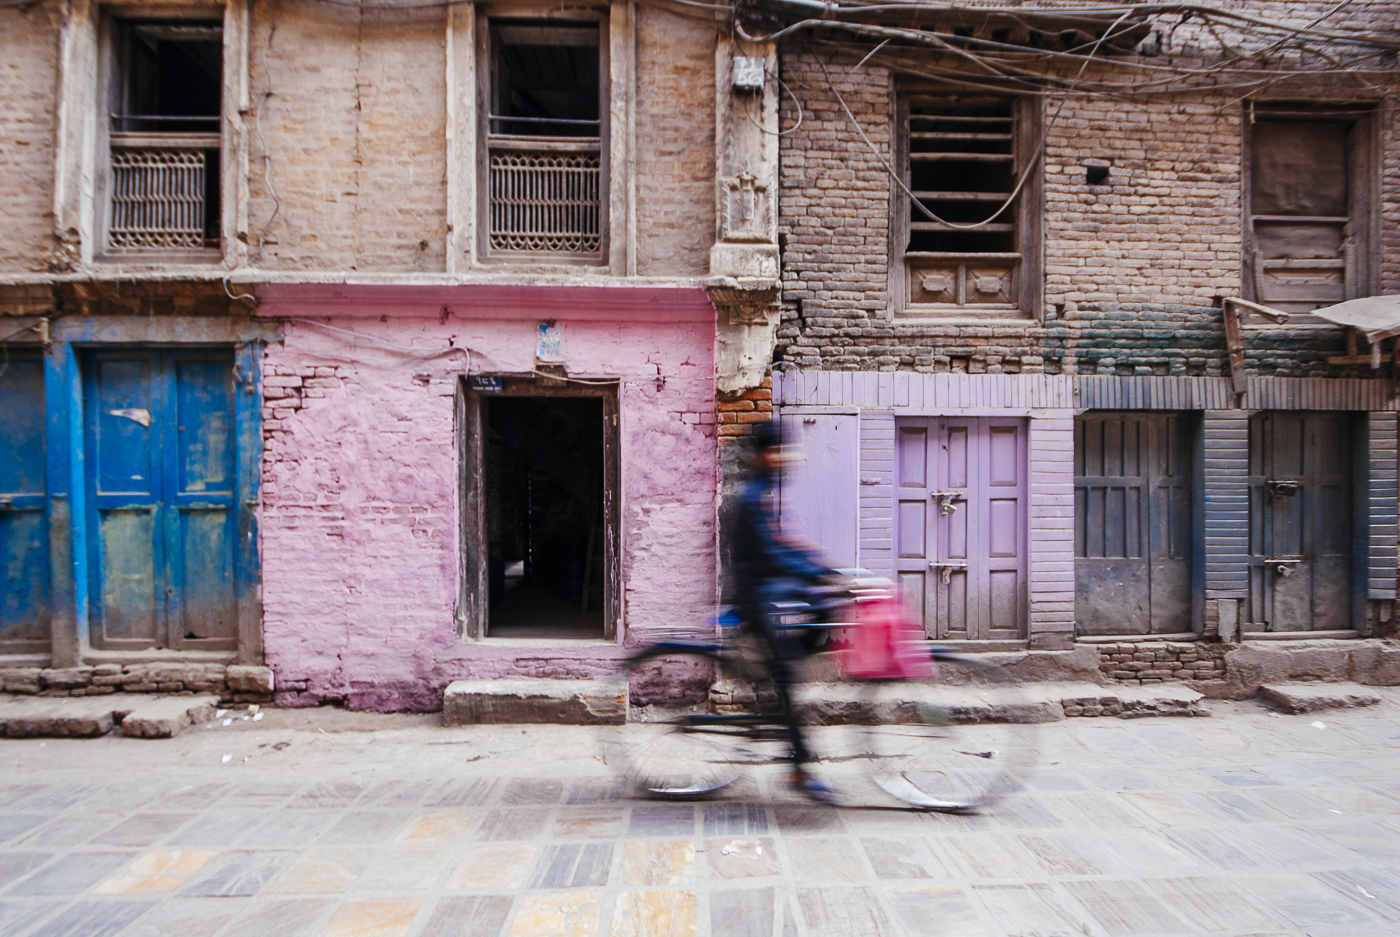 Kathmandu, Nepal man on bicycle